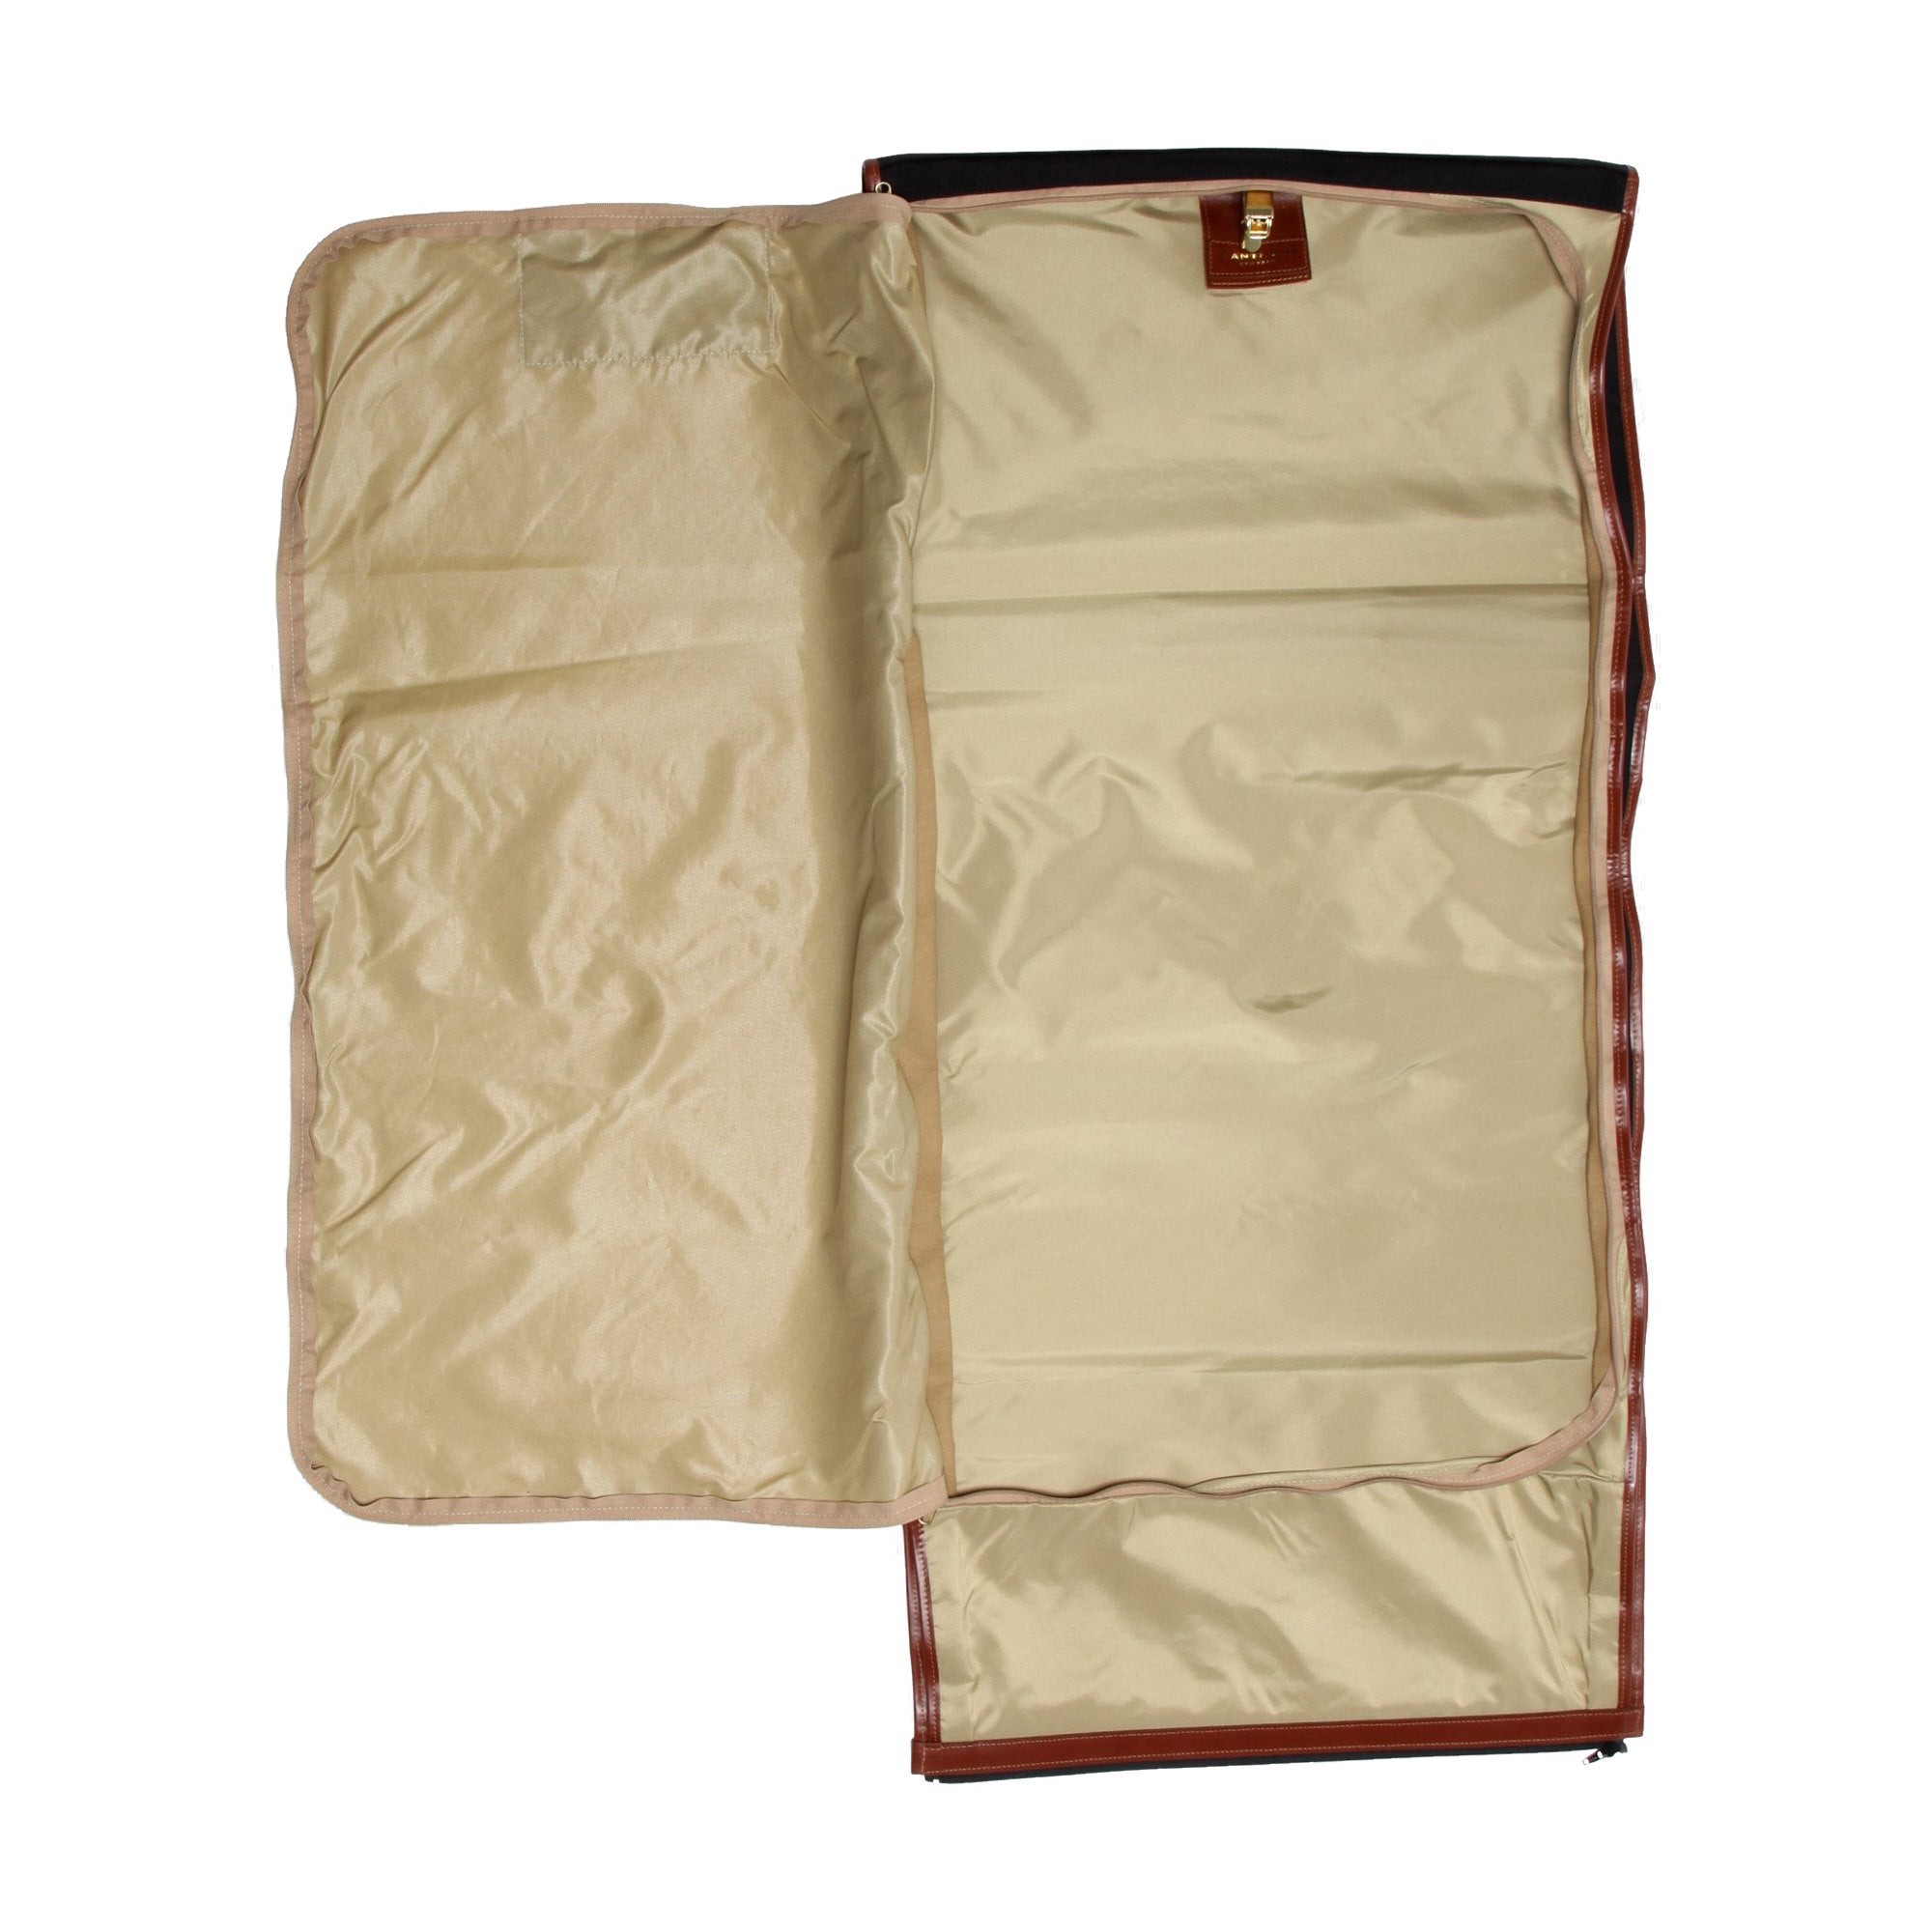 Travel Accessories Trifold Garment Bag